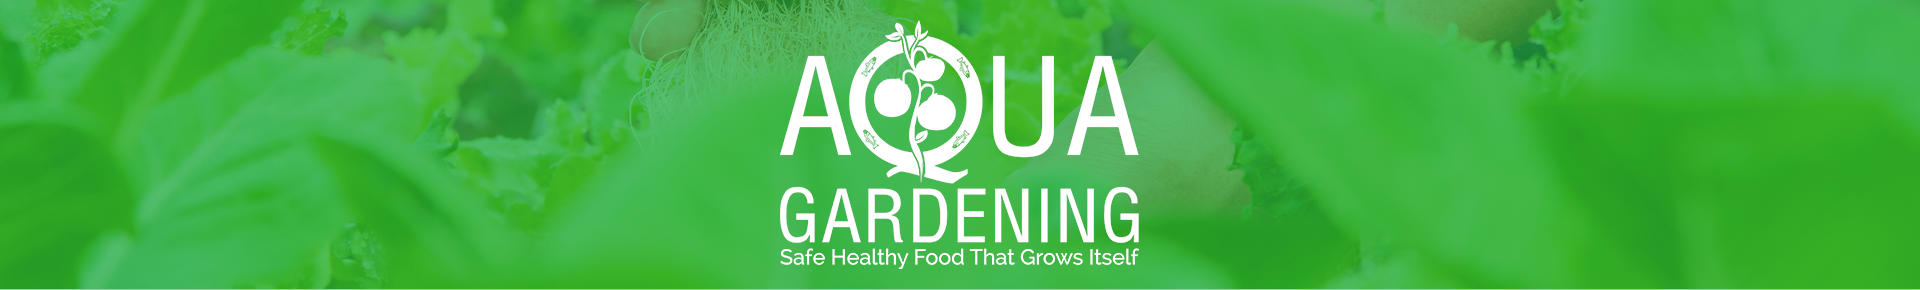 Aqua Gardening - Safe Healthy Food That Grows Itself